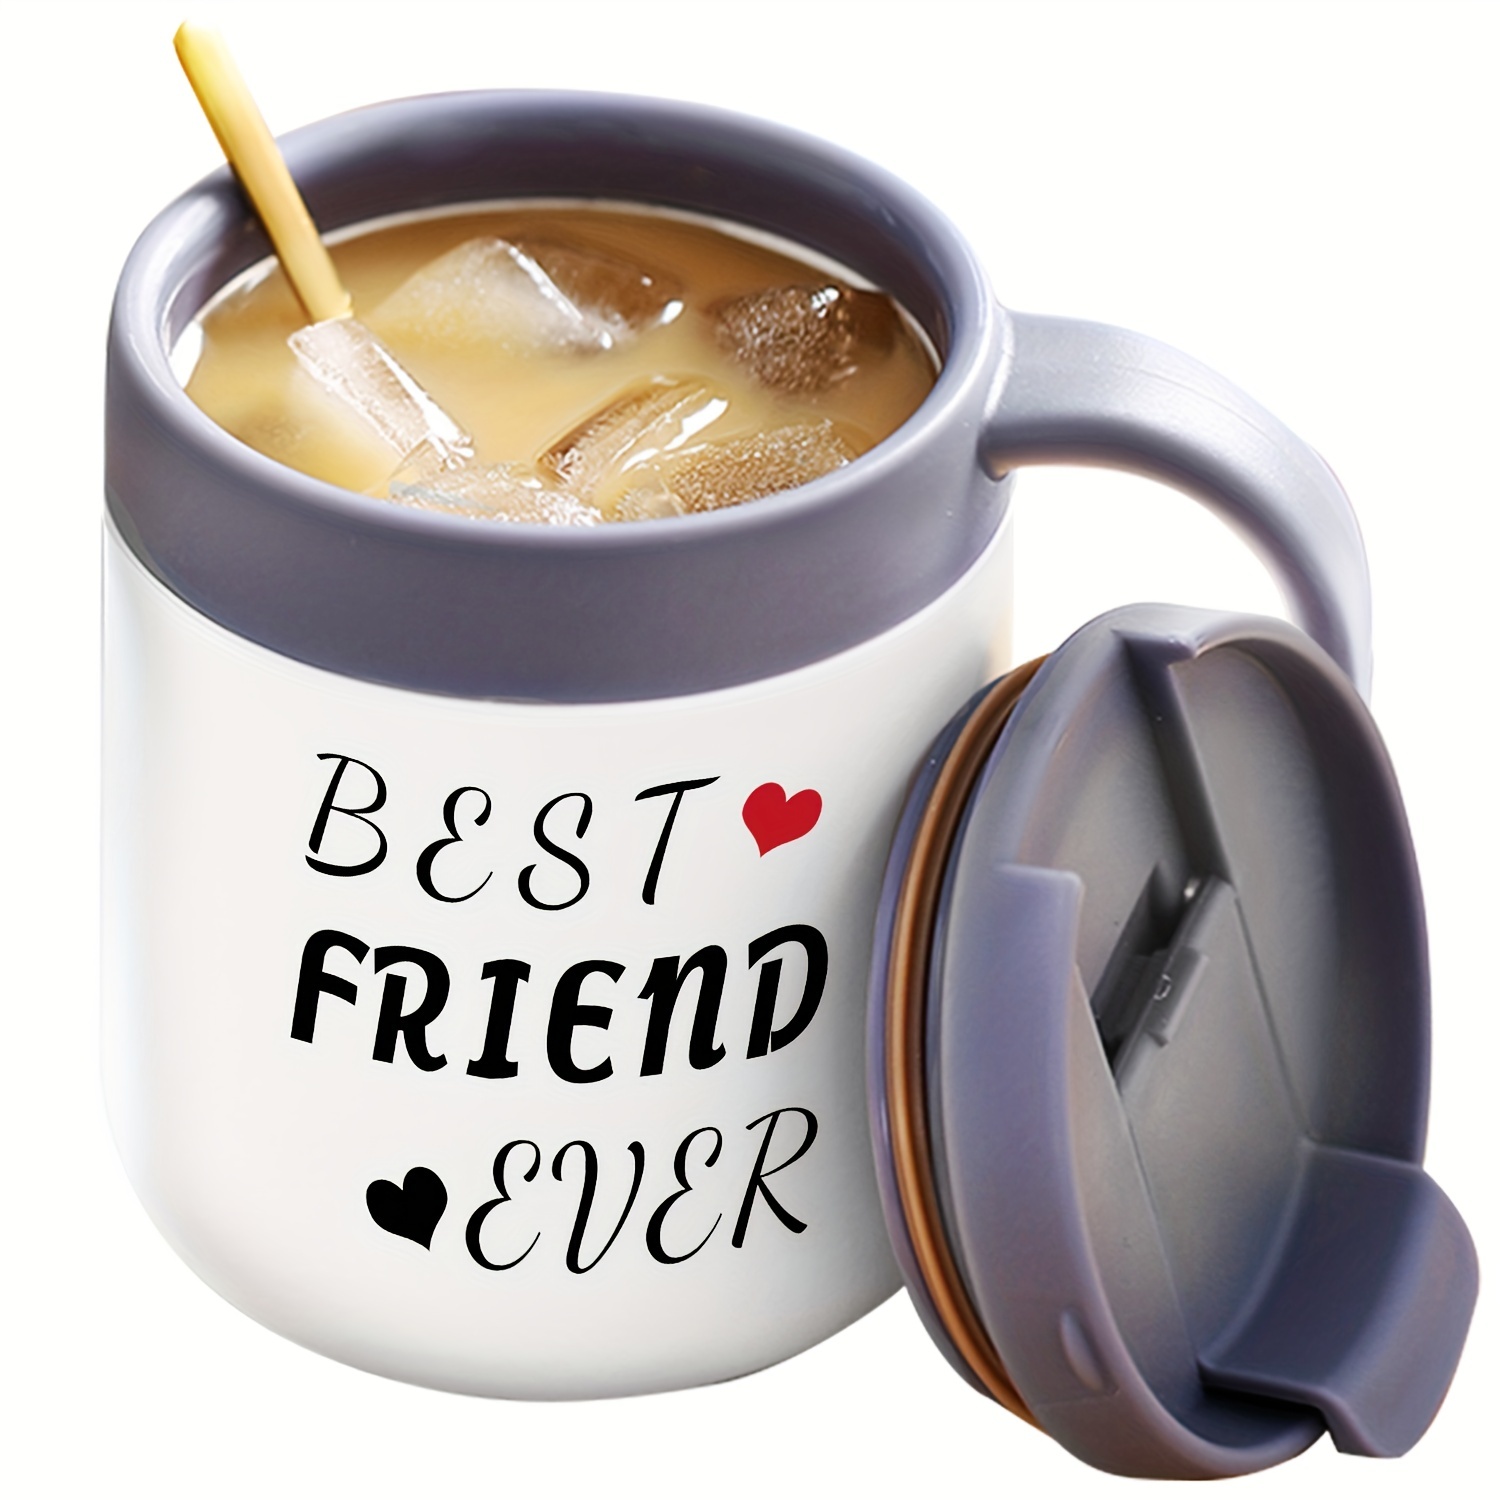 Best Friends Travel Mug - Best Friend Ever Travel Insulated